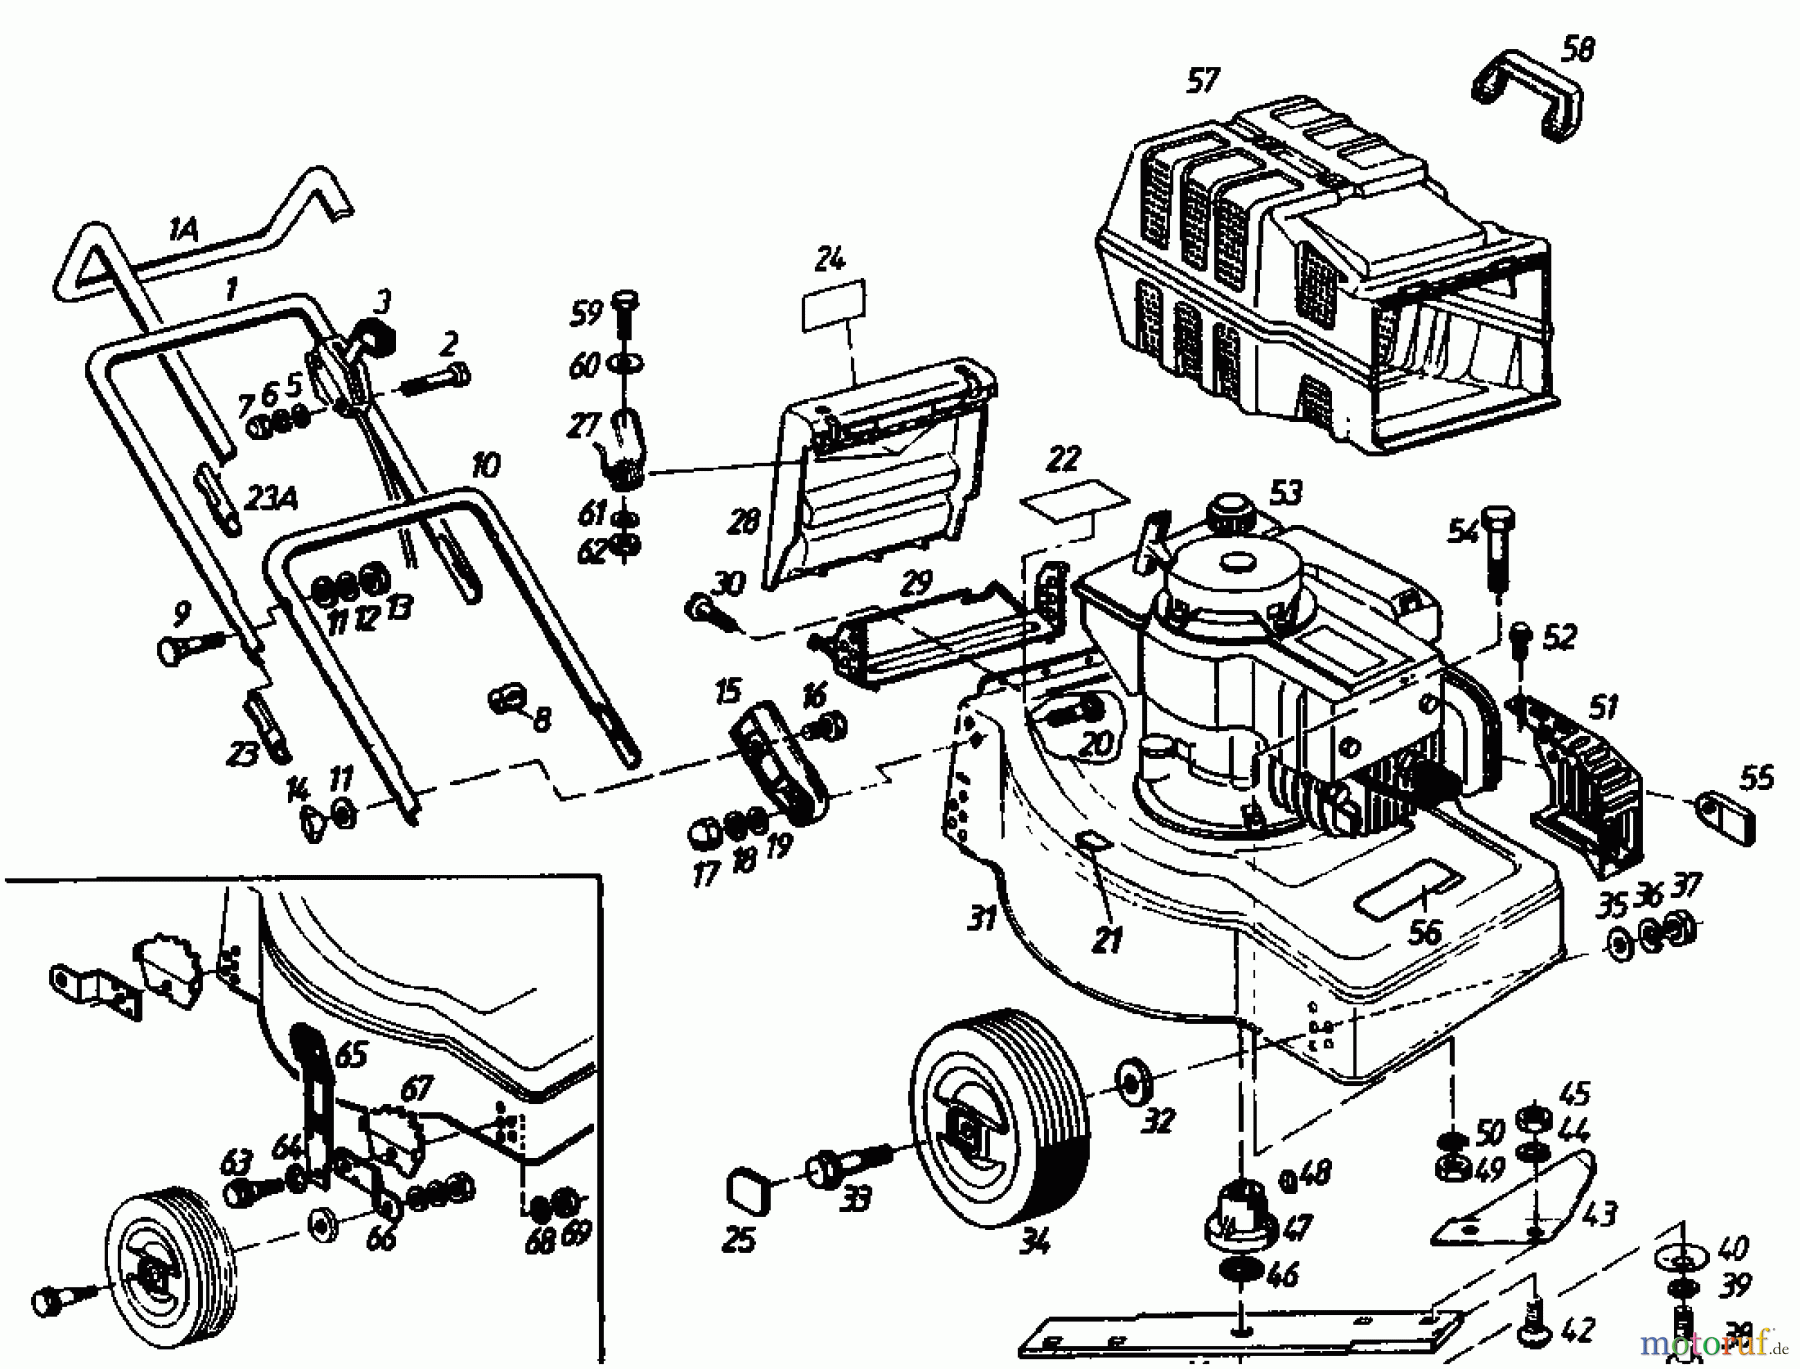  Golf Electric mower HE 02881.04  (1985) Basic machine